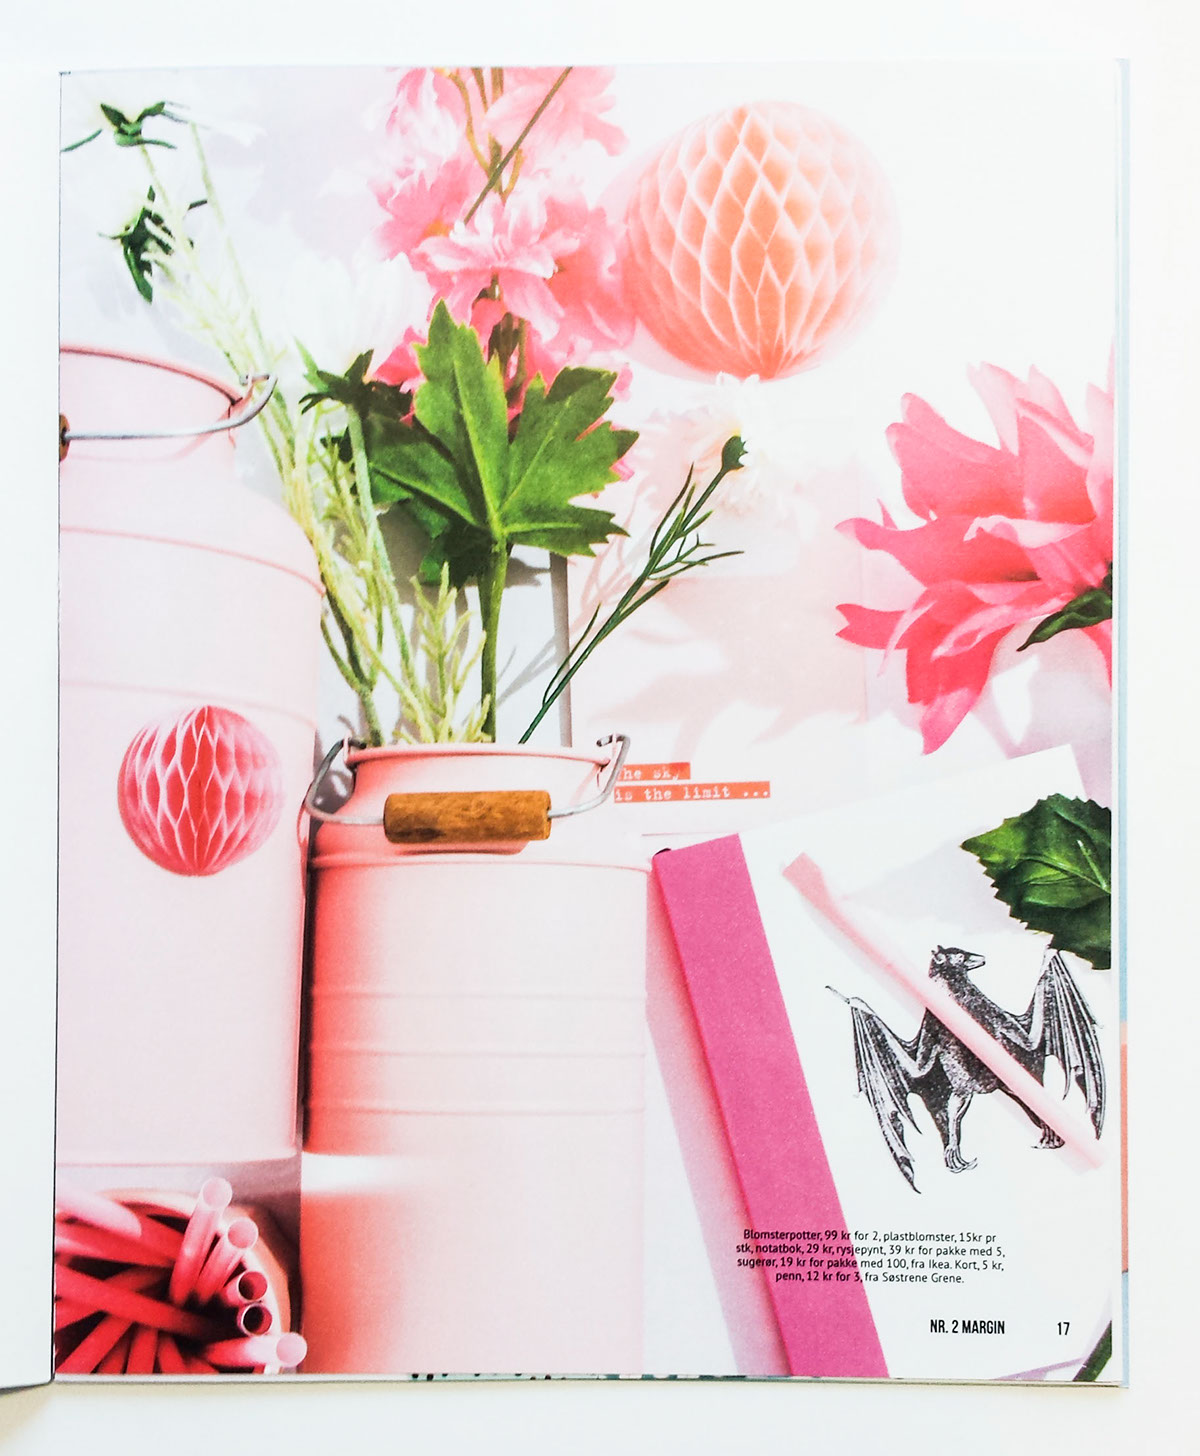 paint design magazine graphic Layout iPad digital mag print photo editorial tablet